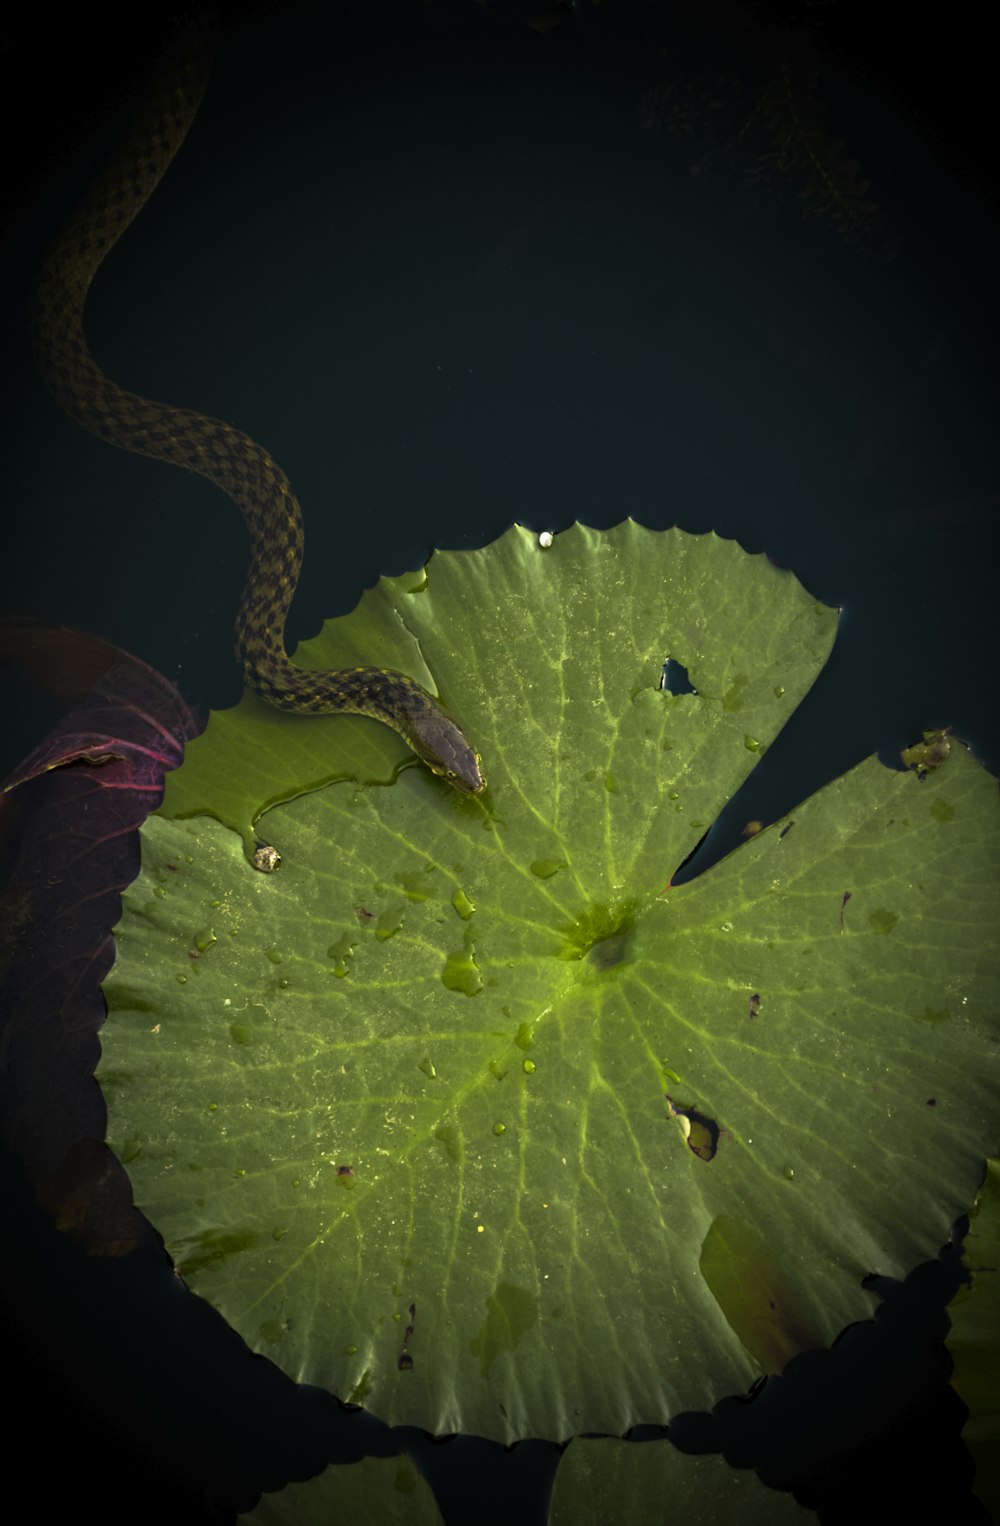 brown snake on top of green leaf